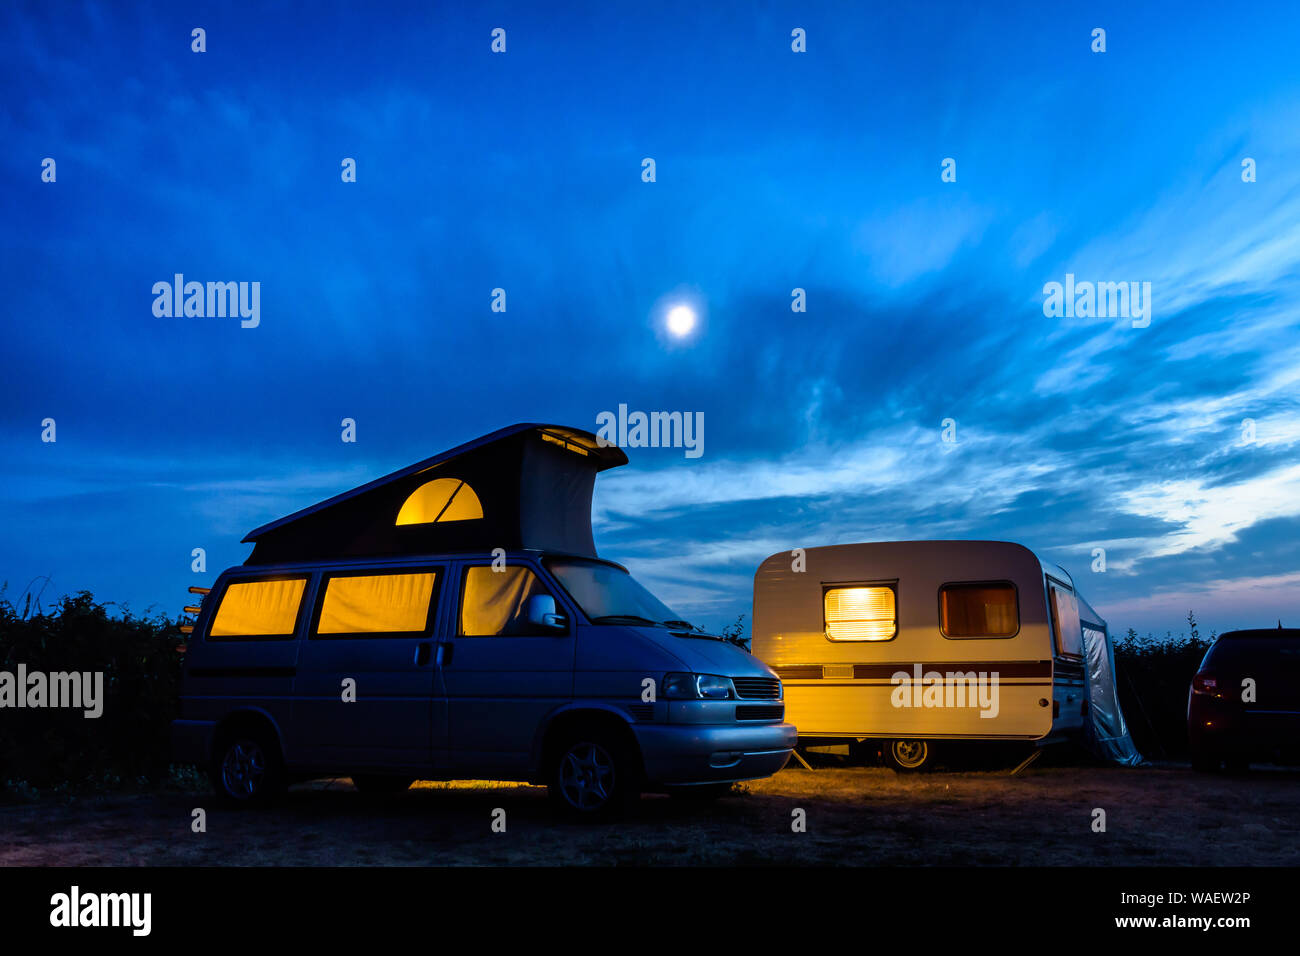 Caravan electric -Fotos und -Bildmaterial in hoher Auflösung – Alamy